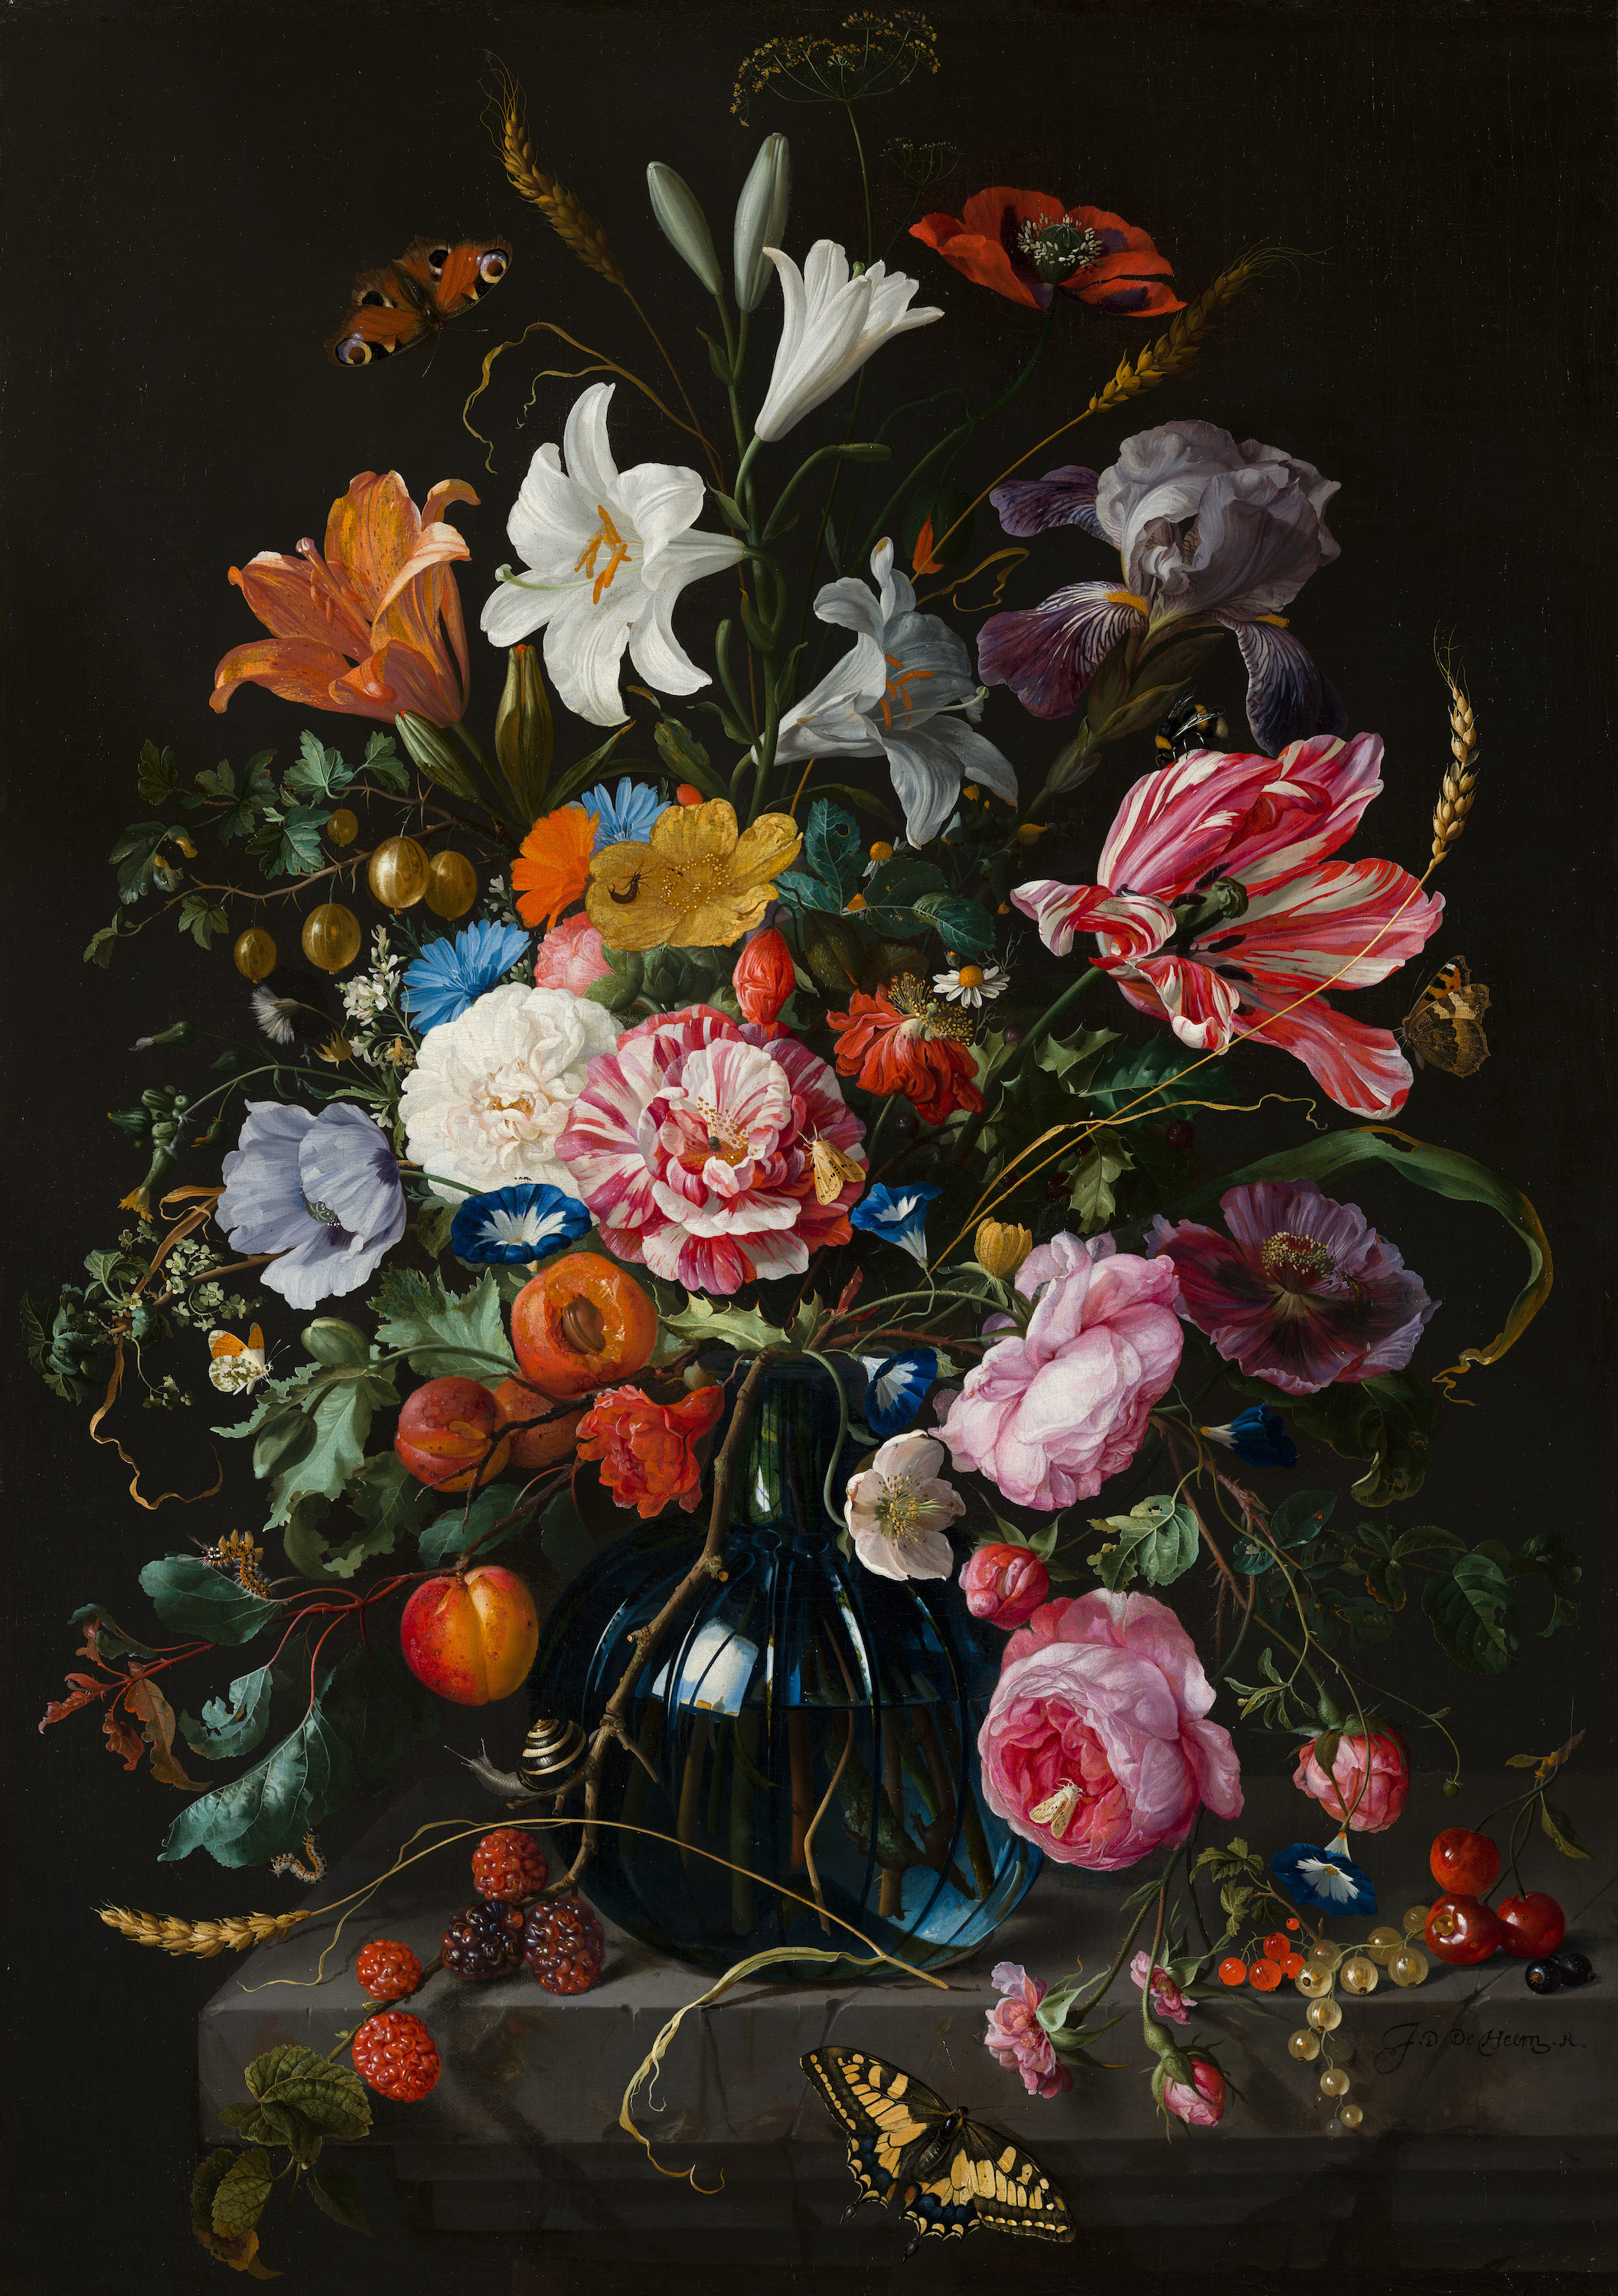 Vaso di fiori by Jan Davidsz de Heem - 1670 - 52,6 x 74,2 cm 